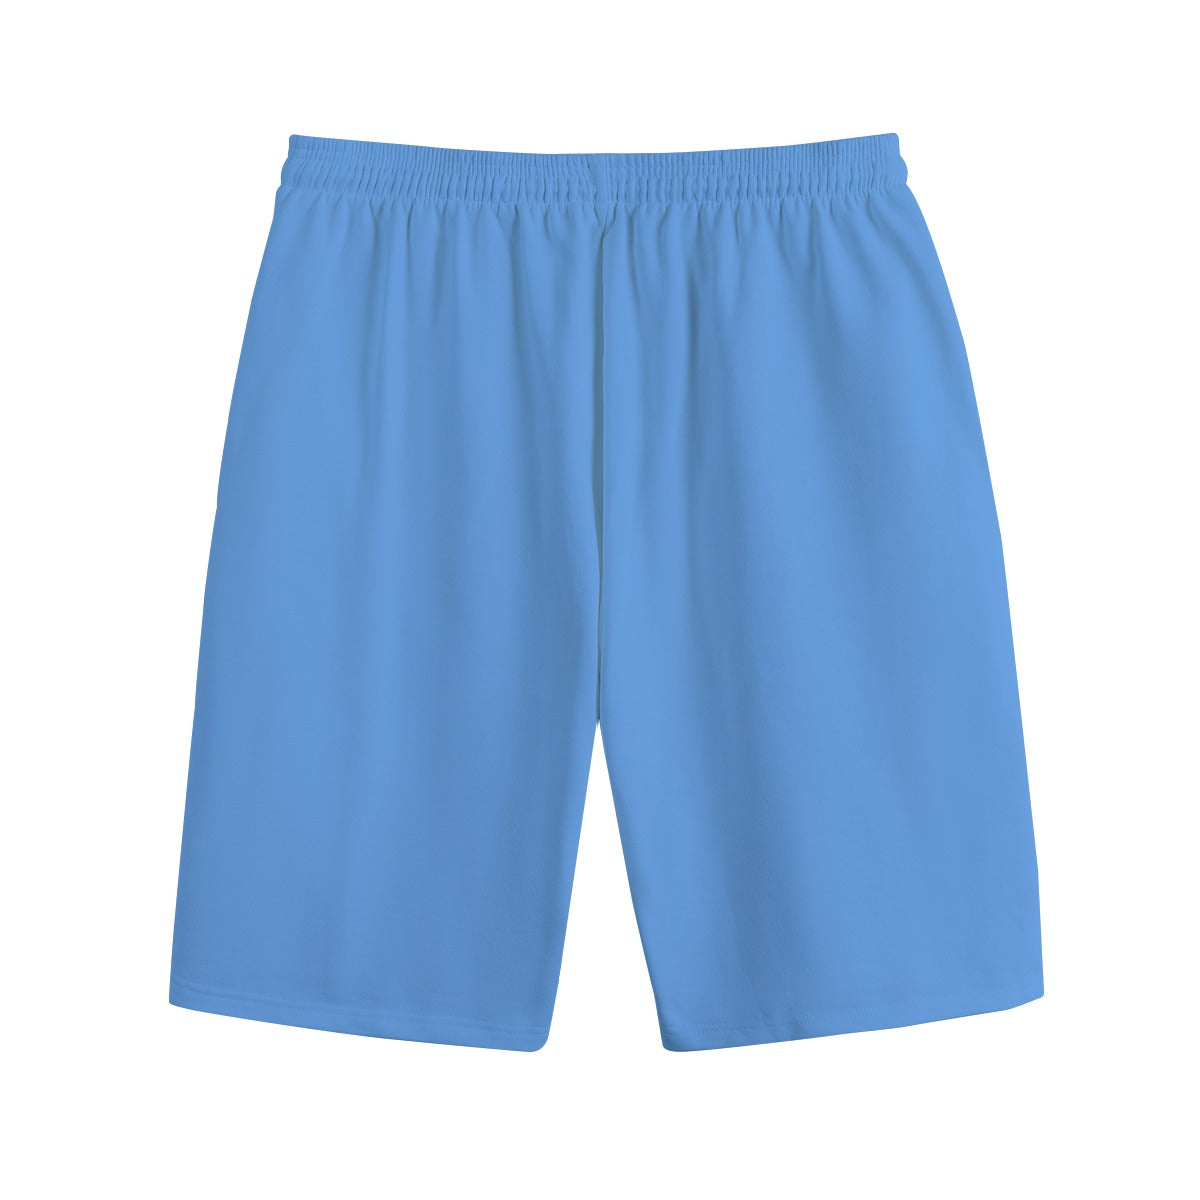 AM&IS Men's Carolina Blue Shorts | 100% Cotton